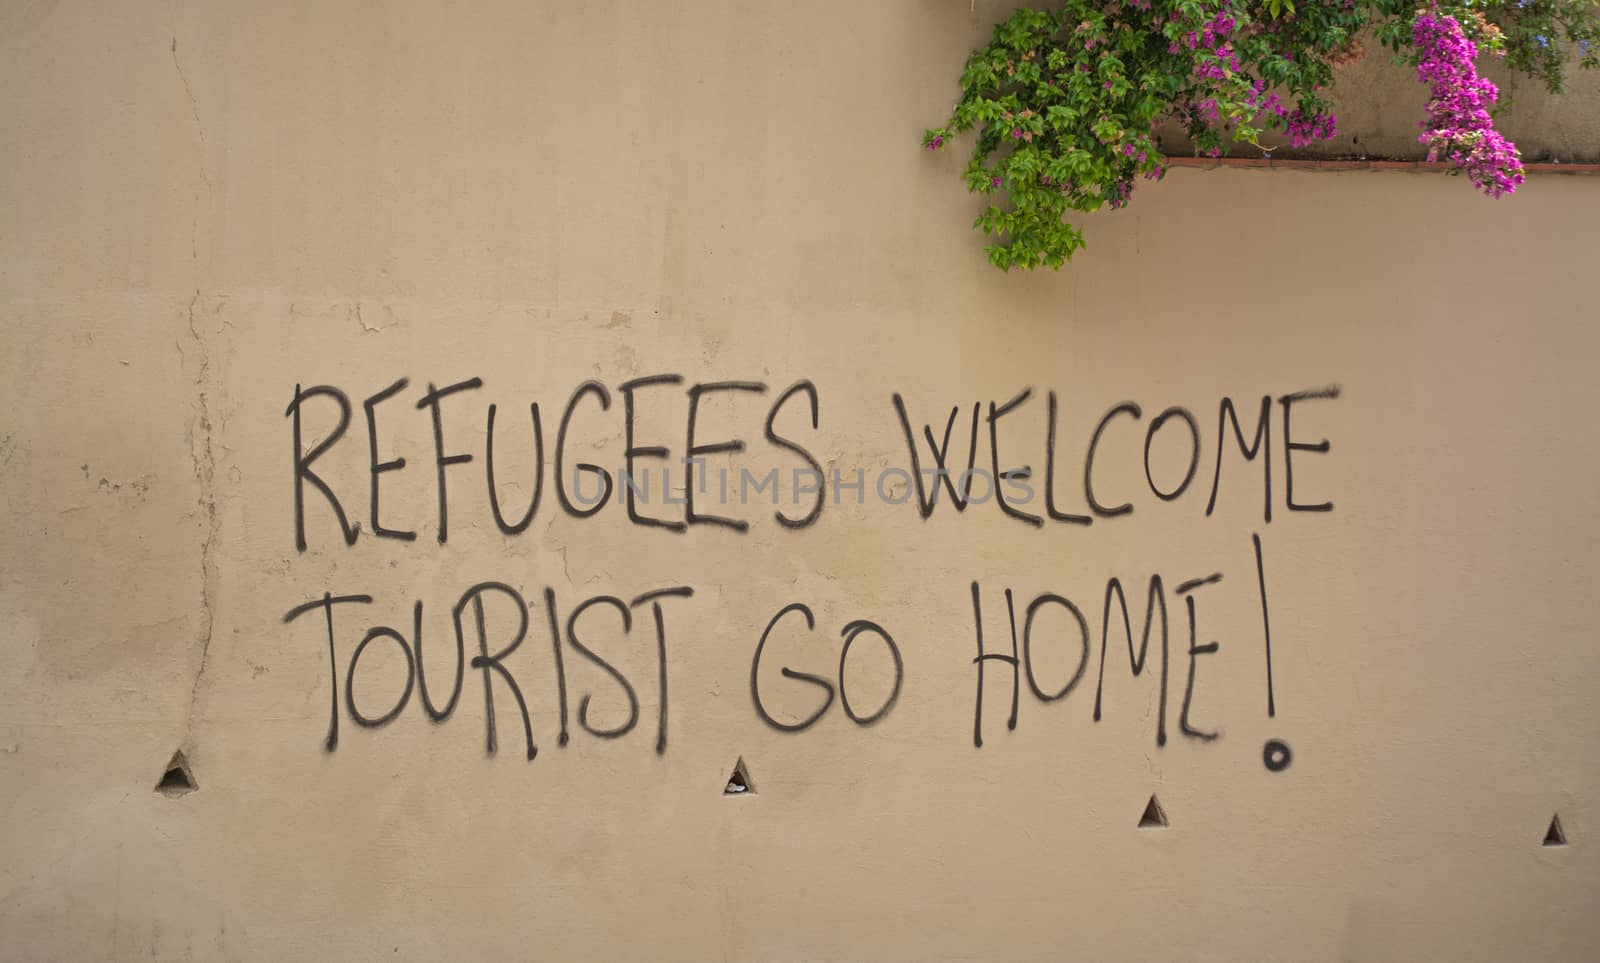 'Tourists Go Home' Graffiti by gary_parker